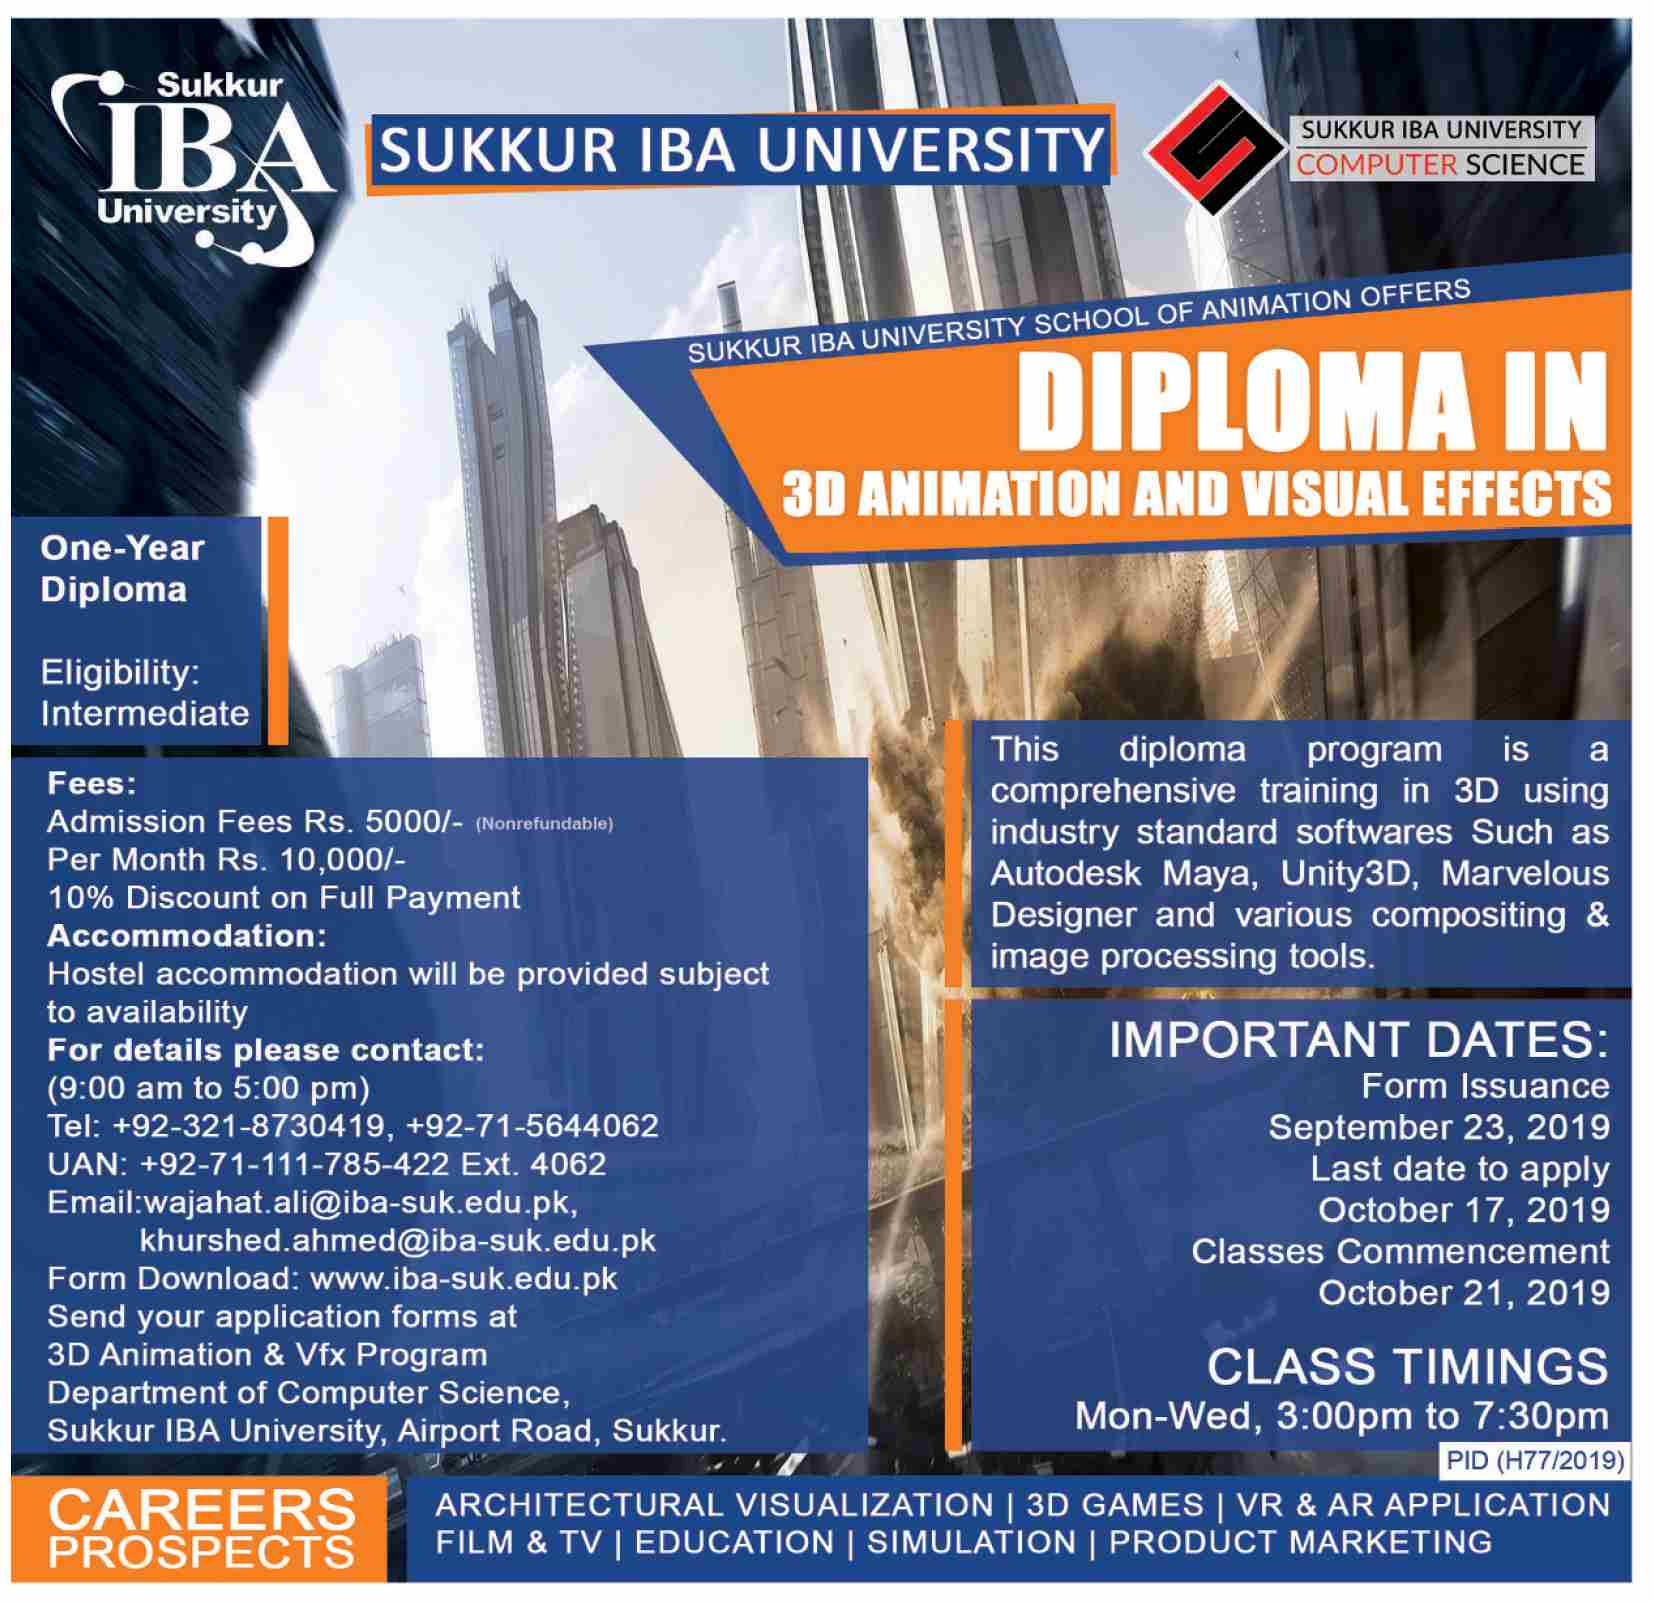 Diploma in 3D Animation and Visual Effects Sukkur IBA University -  EmployeesPortal